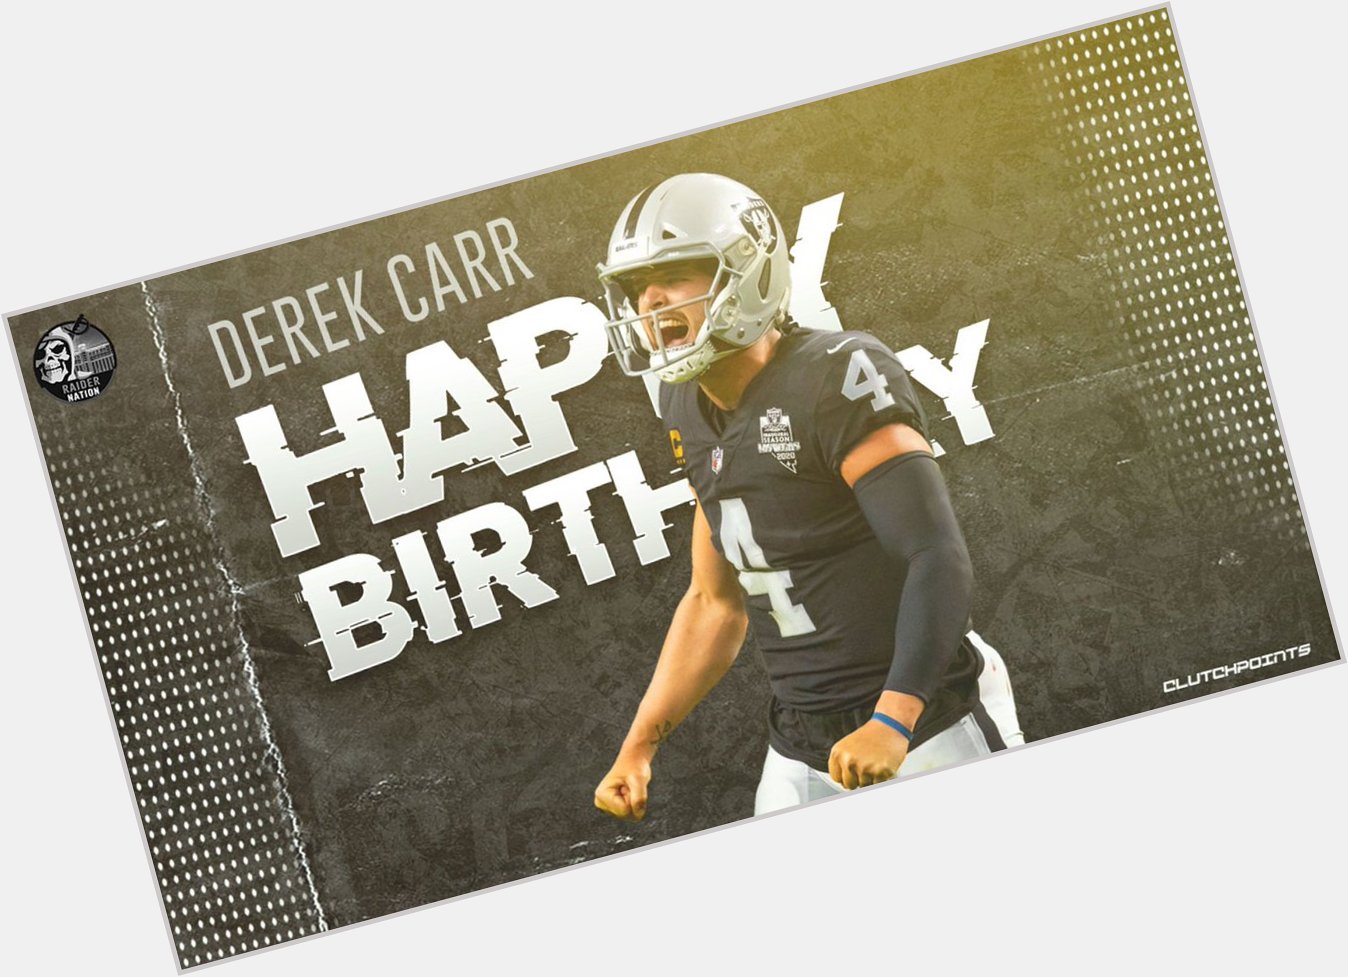 Join us in wishing Derek Carr a happy birthday! 